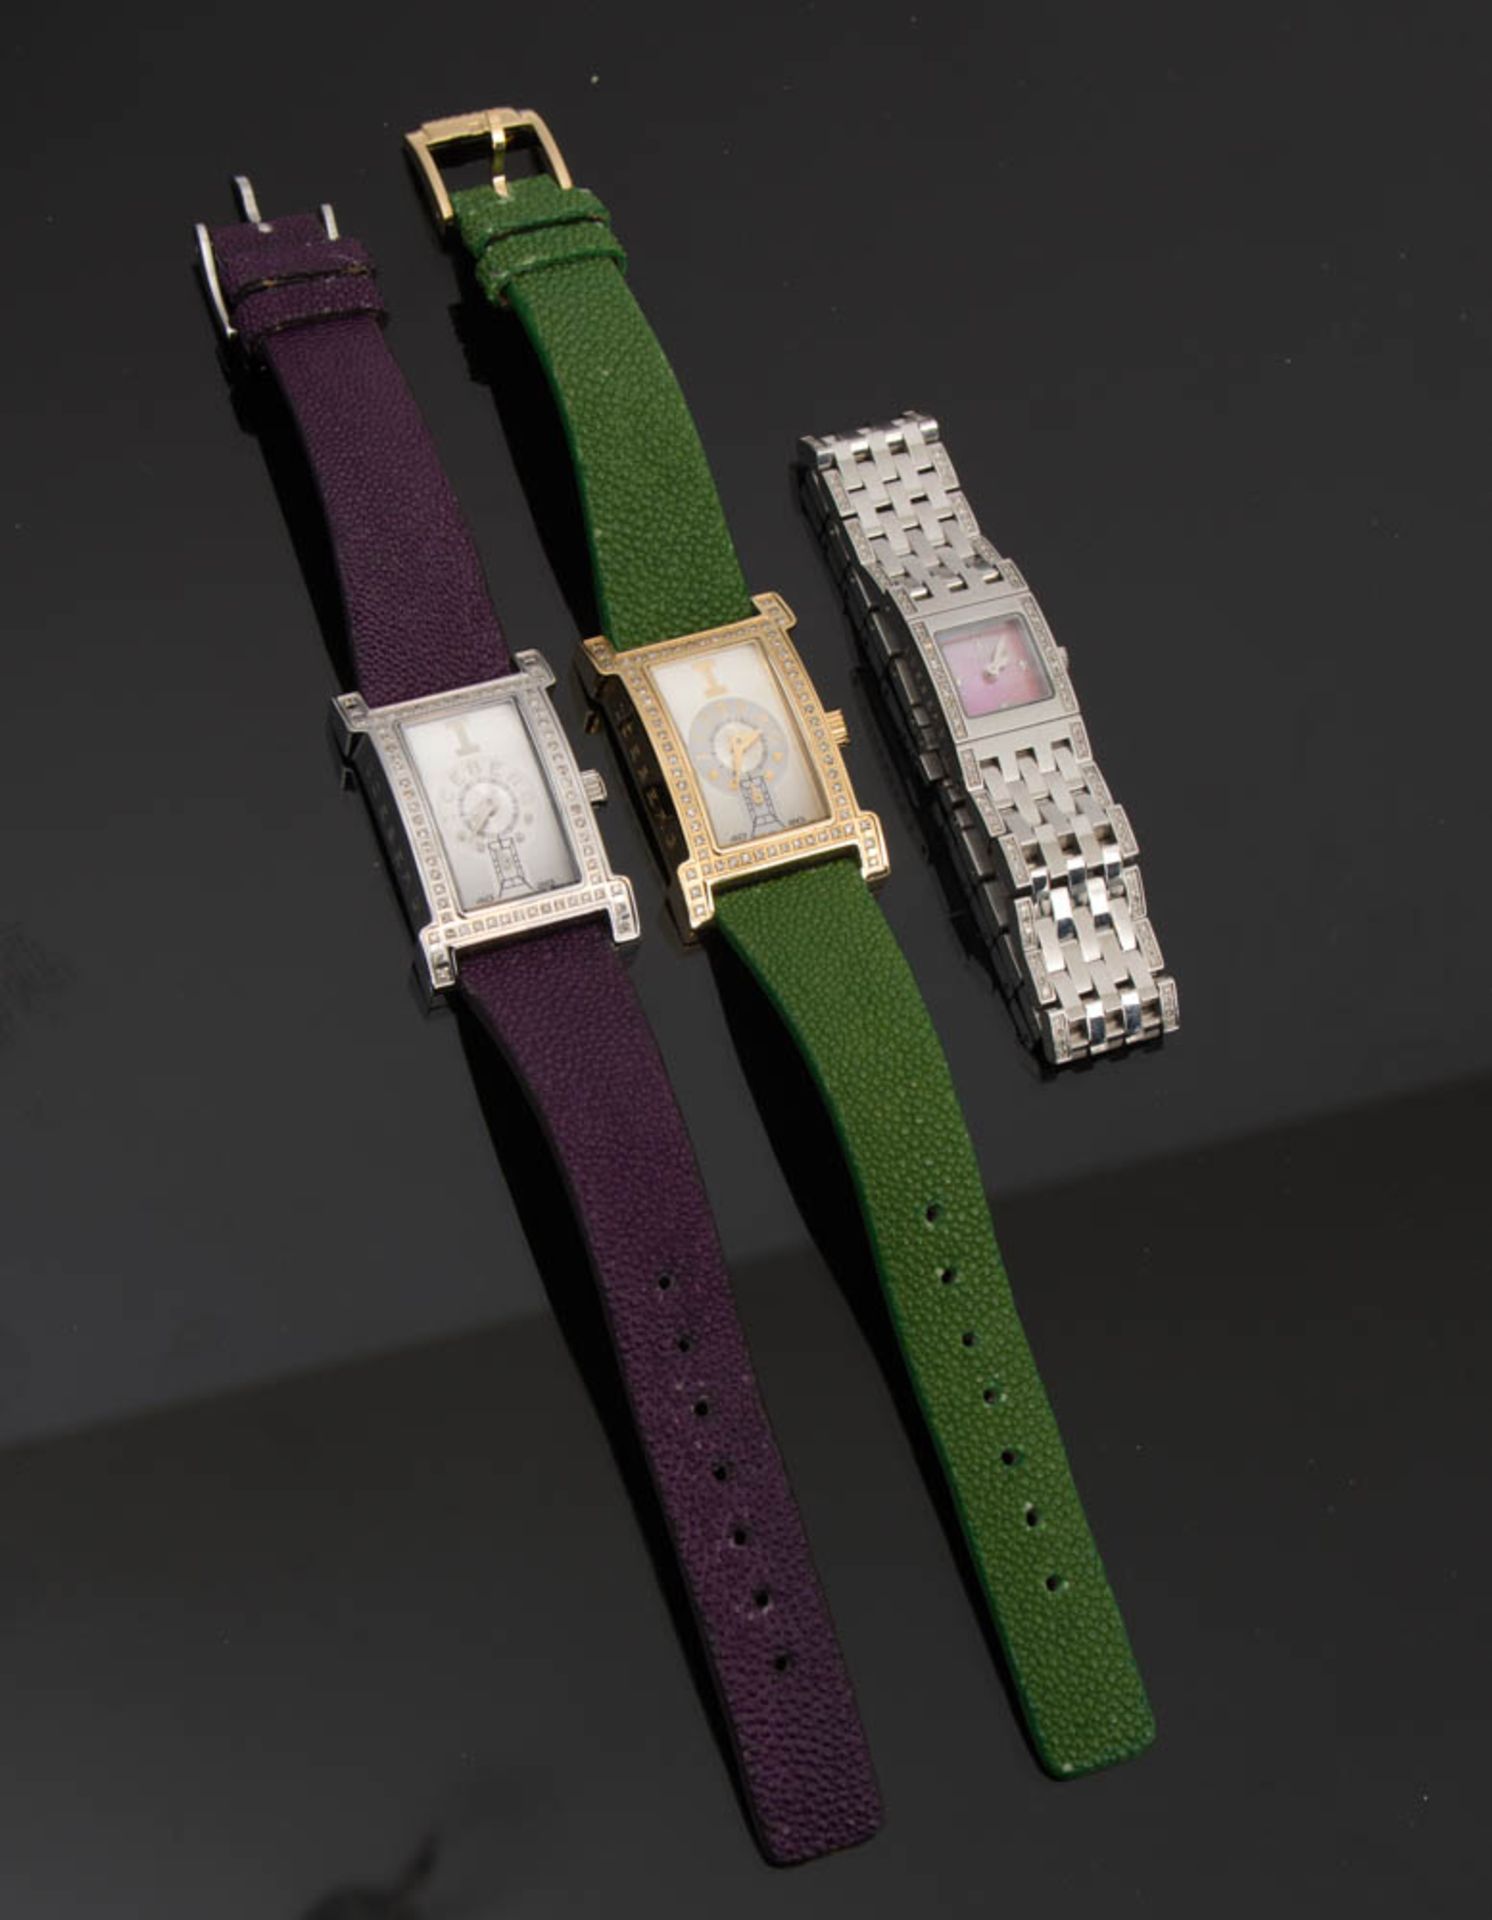 ICEBERG, 3x Damen-Armbanduhr Analog Quarz, Leder/Metall.Neuwertig und fuktionsfähig. - Bild 6 aus 6